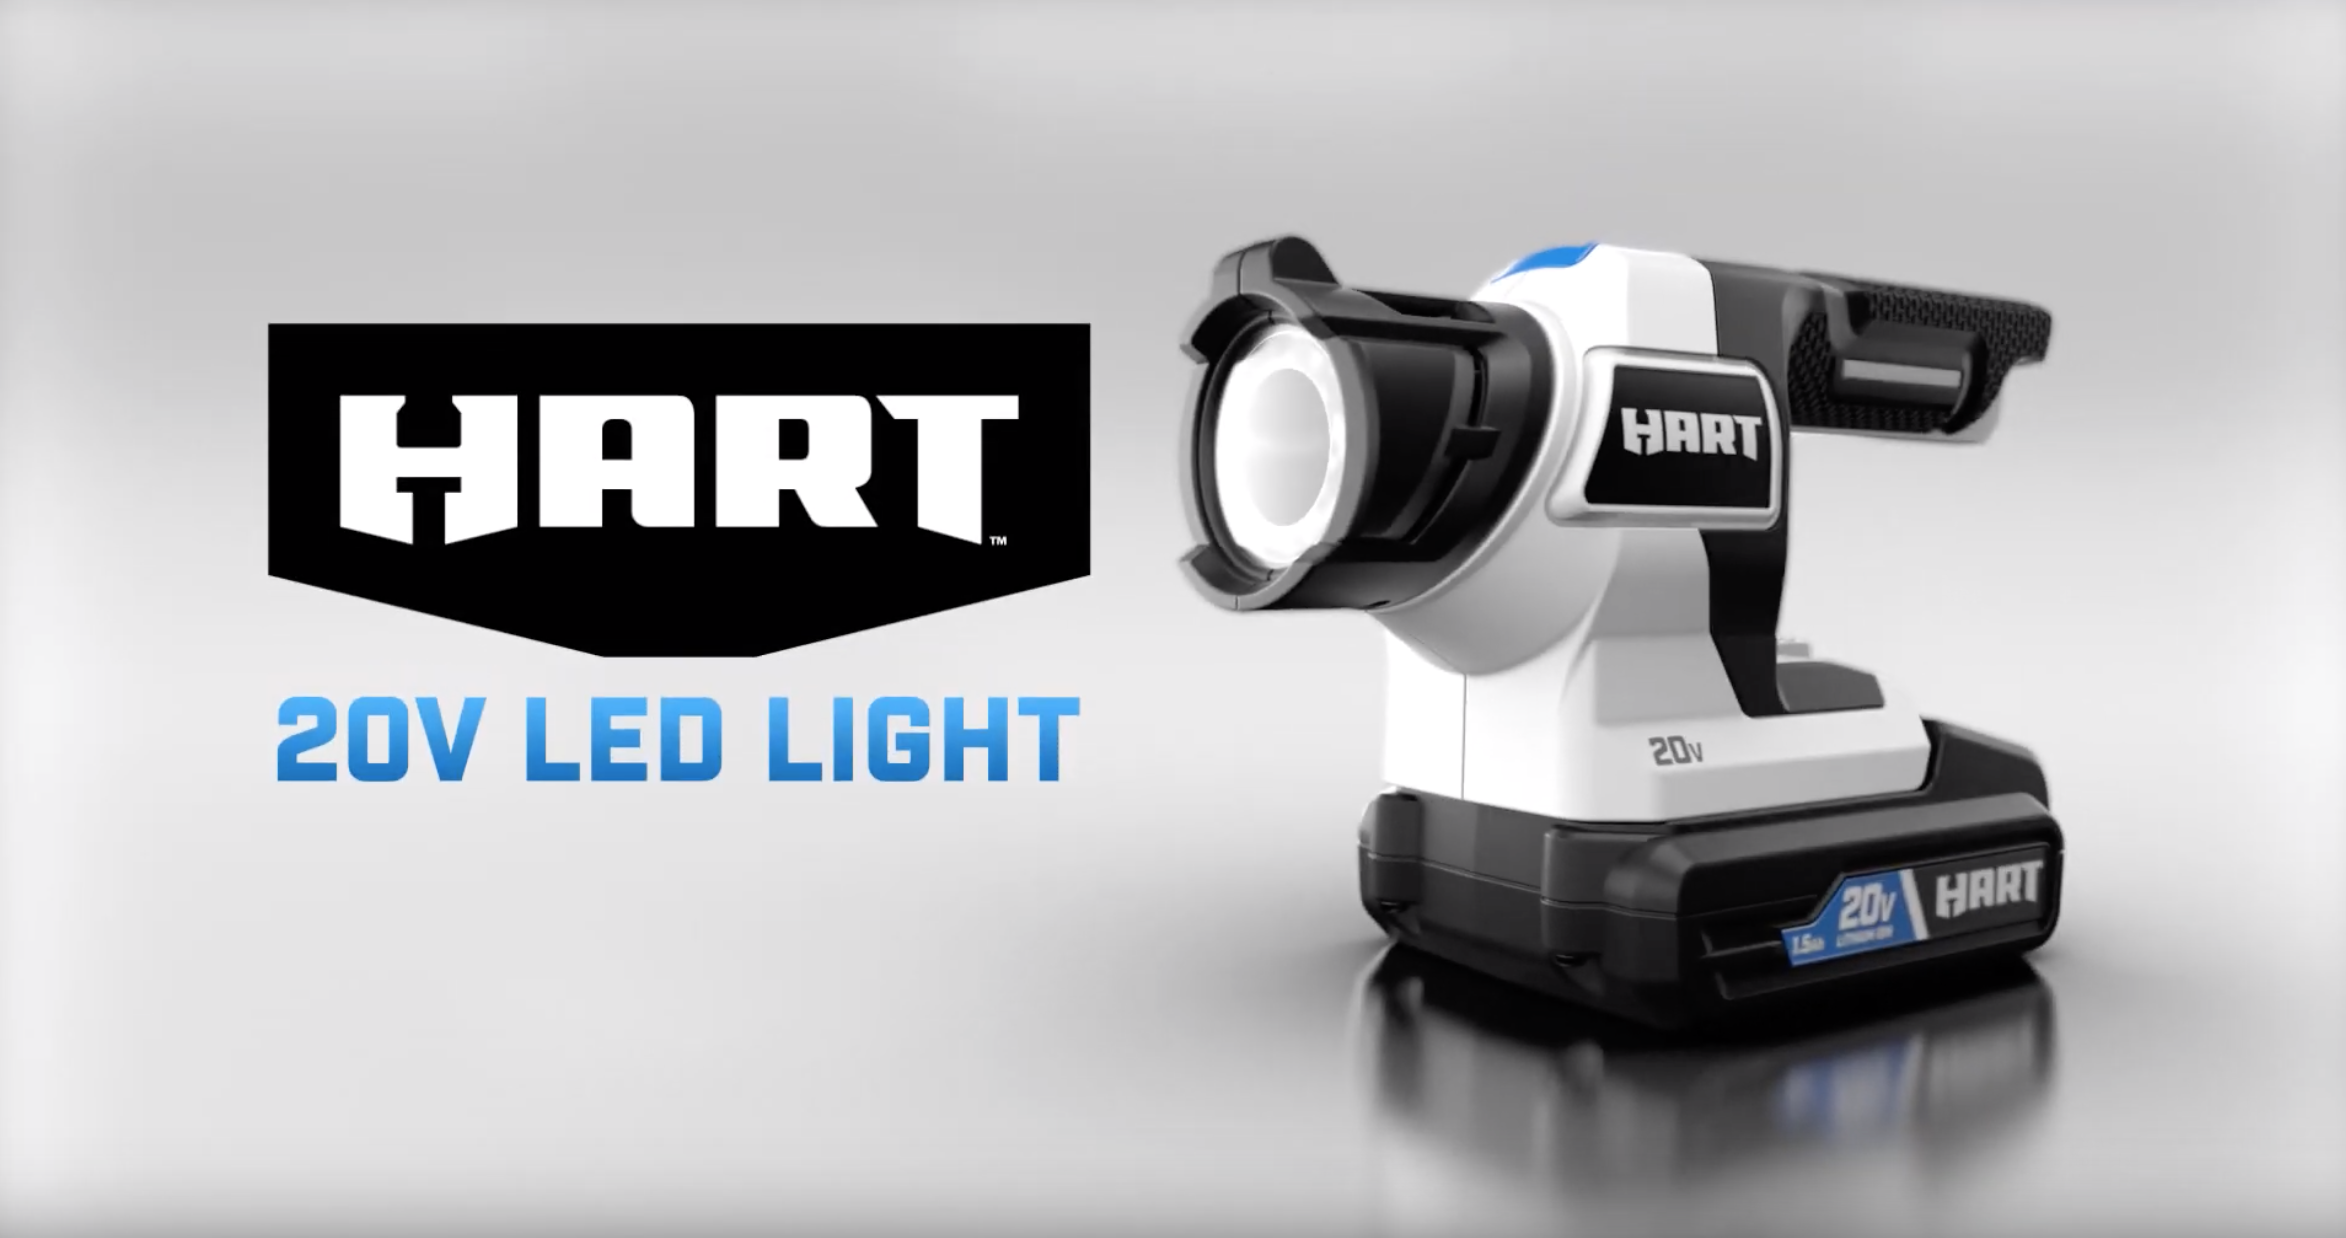 HART HPHL01 20V LED Light for sale online 